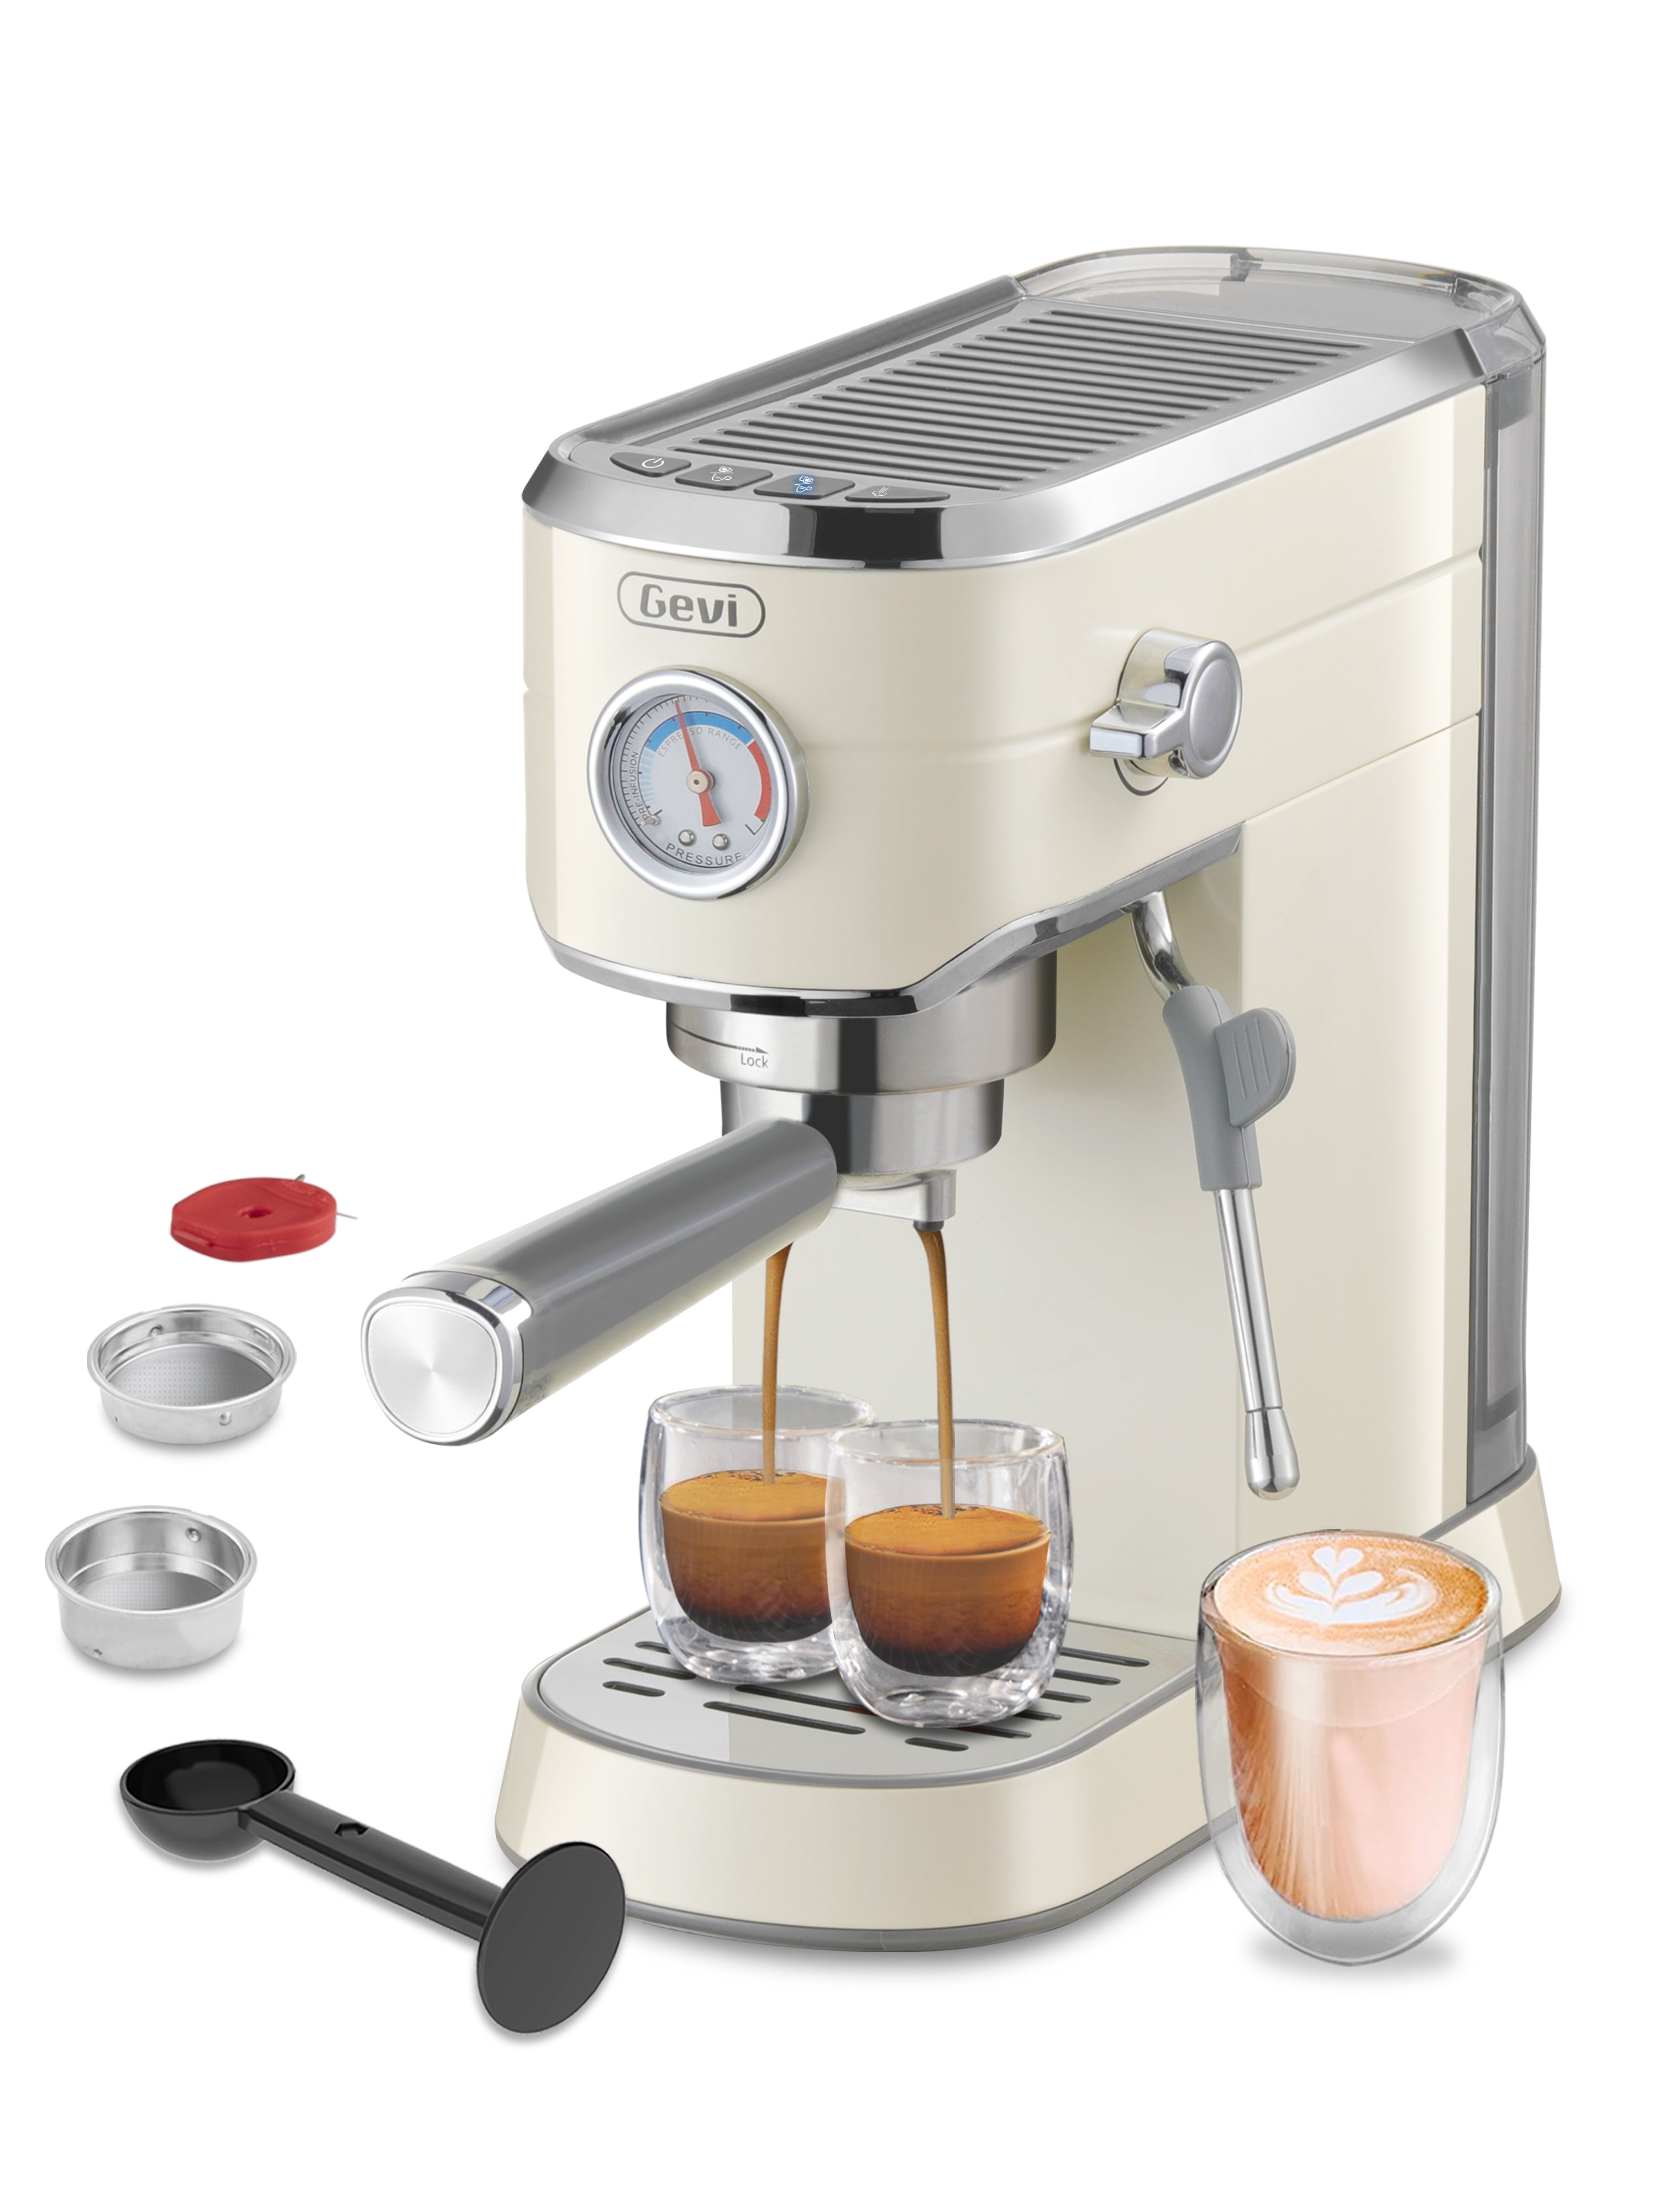 Gevi 20 Bar Compact Professional Espresso Coffee Machine, Beige Color, 35  OZ, New Condition